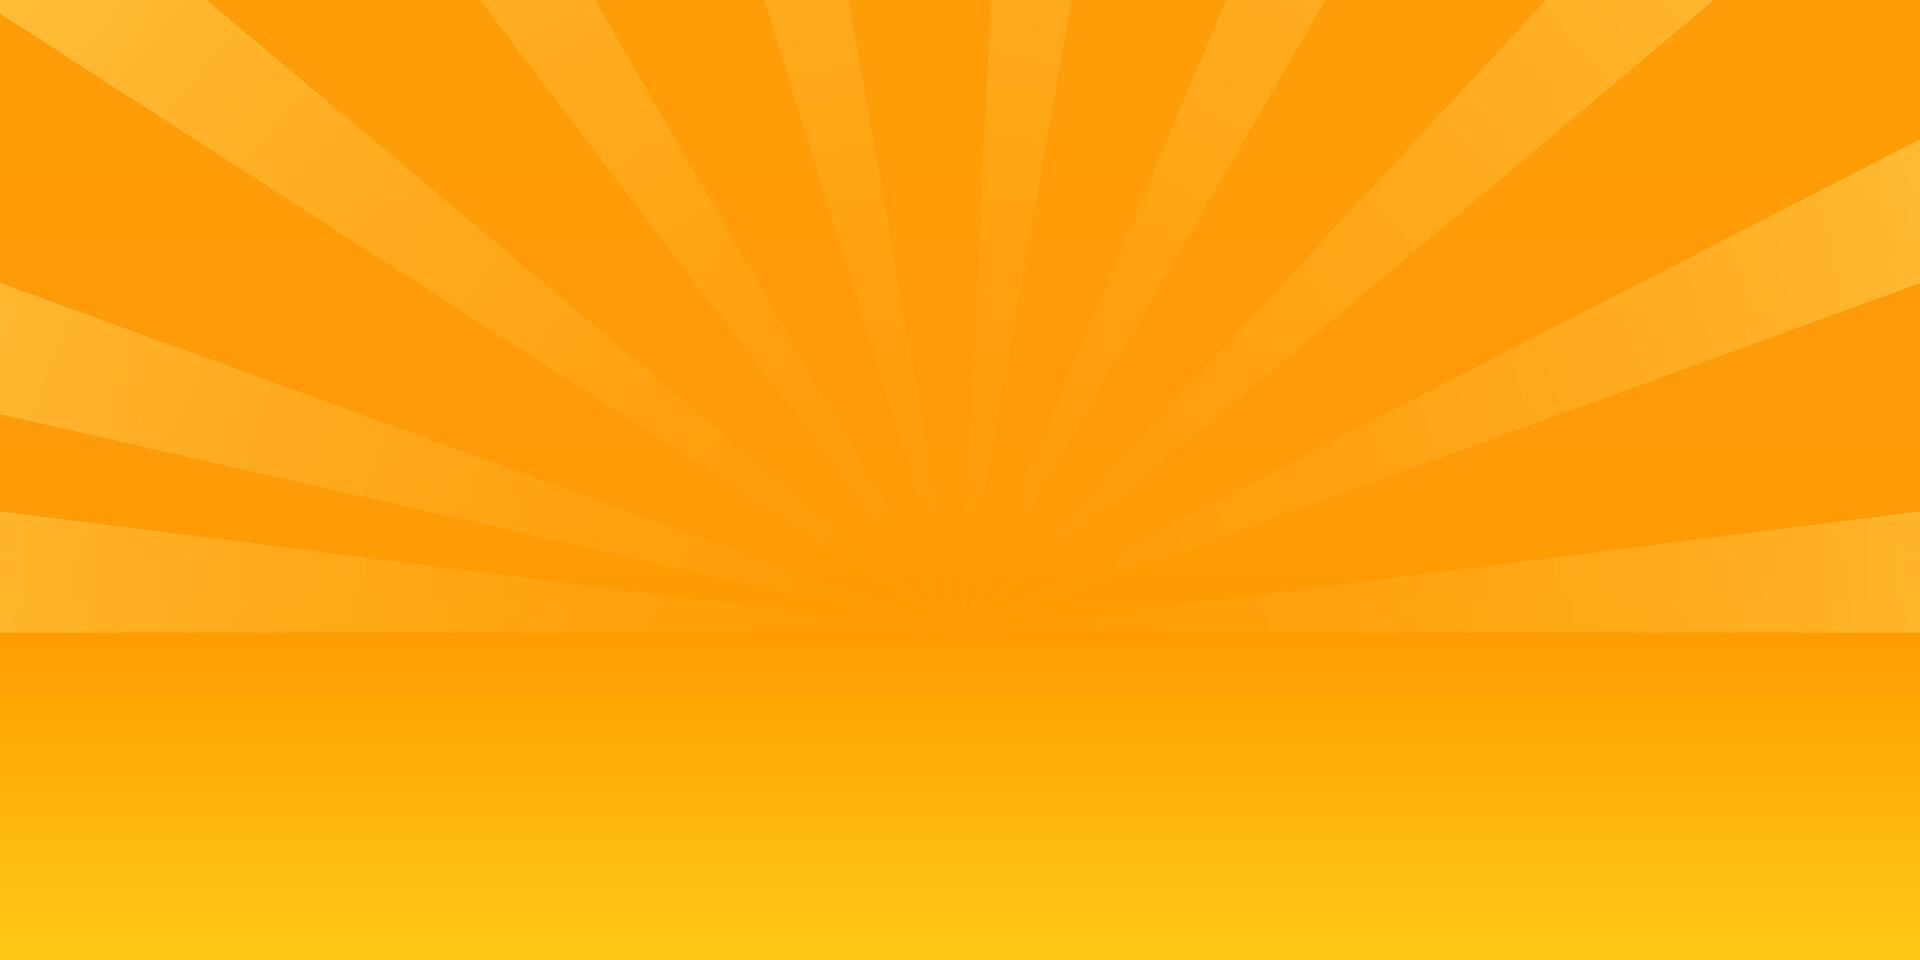 Orange background with yellow glowing rays. Retro sunrise banner vector